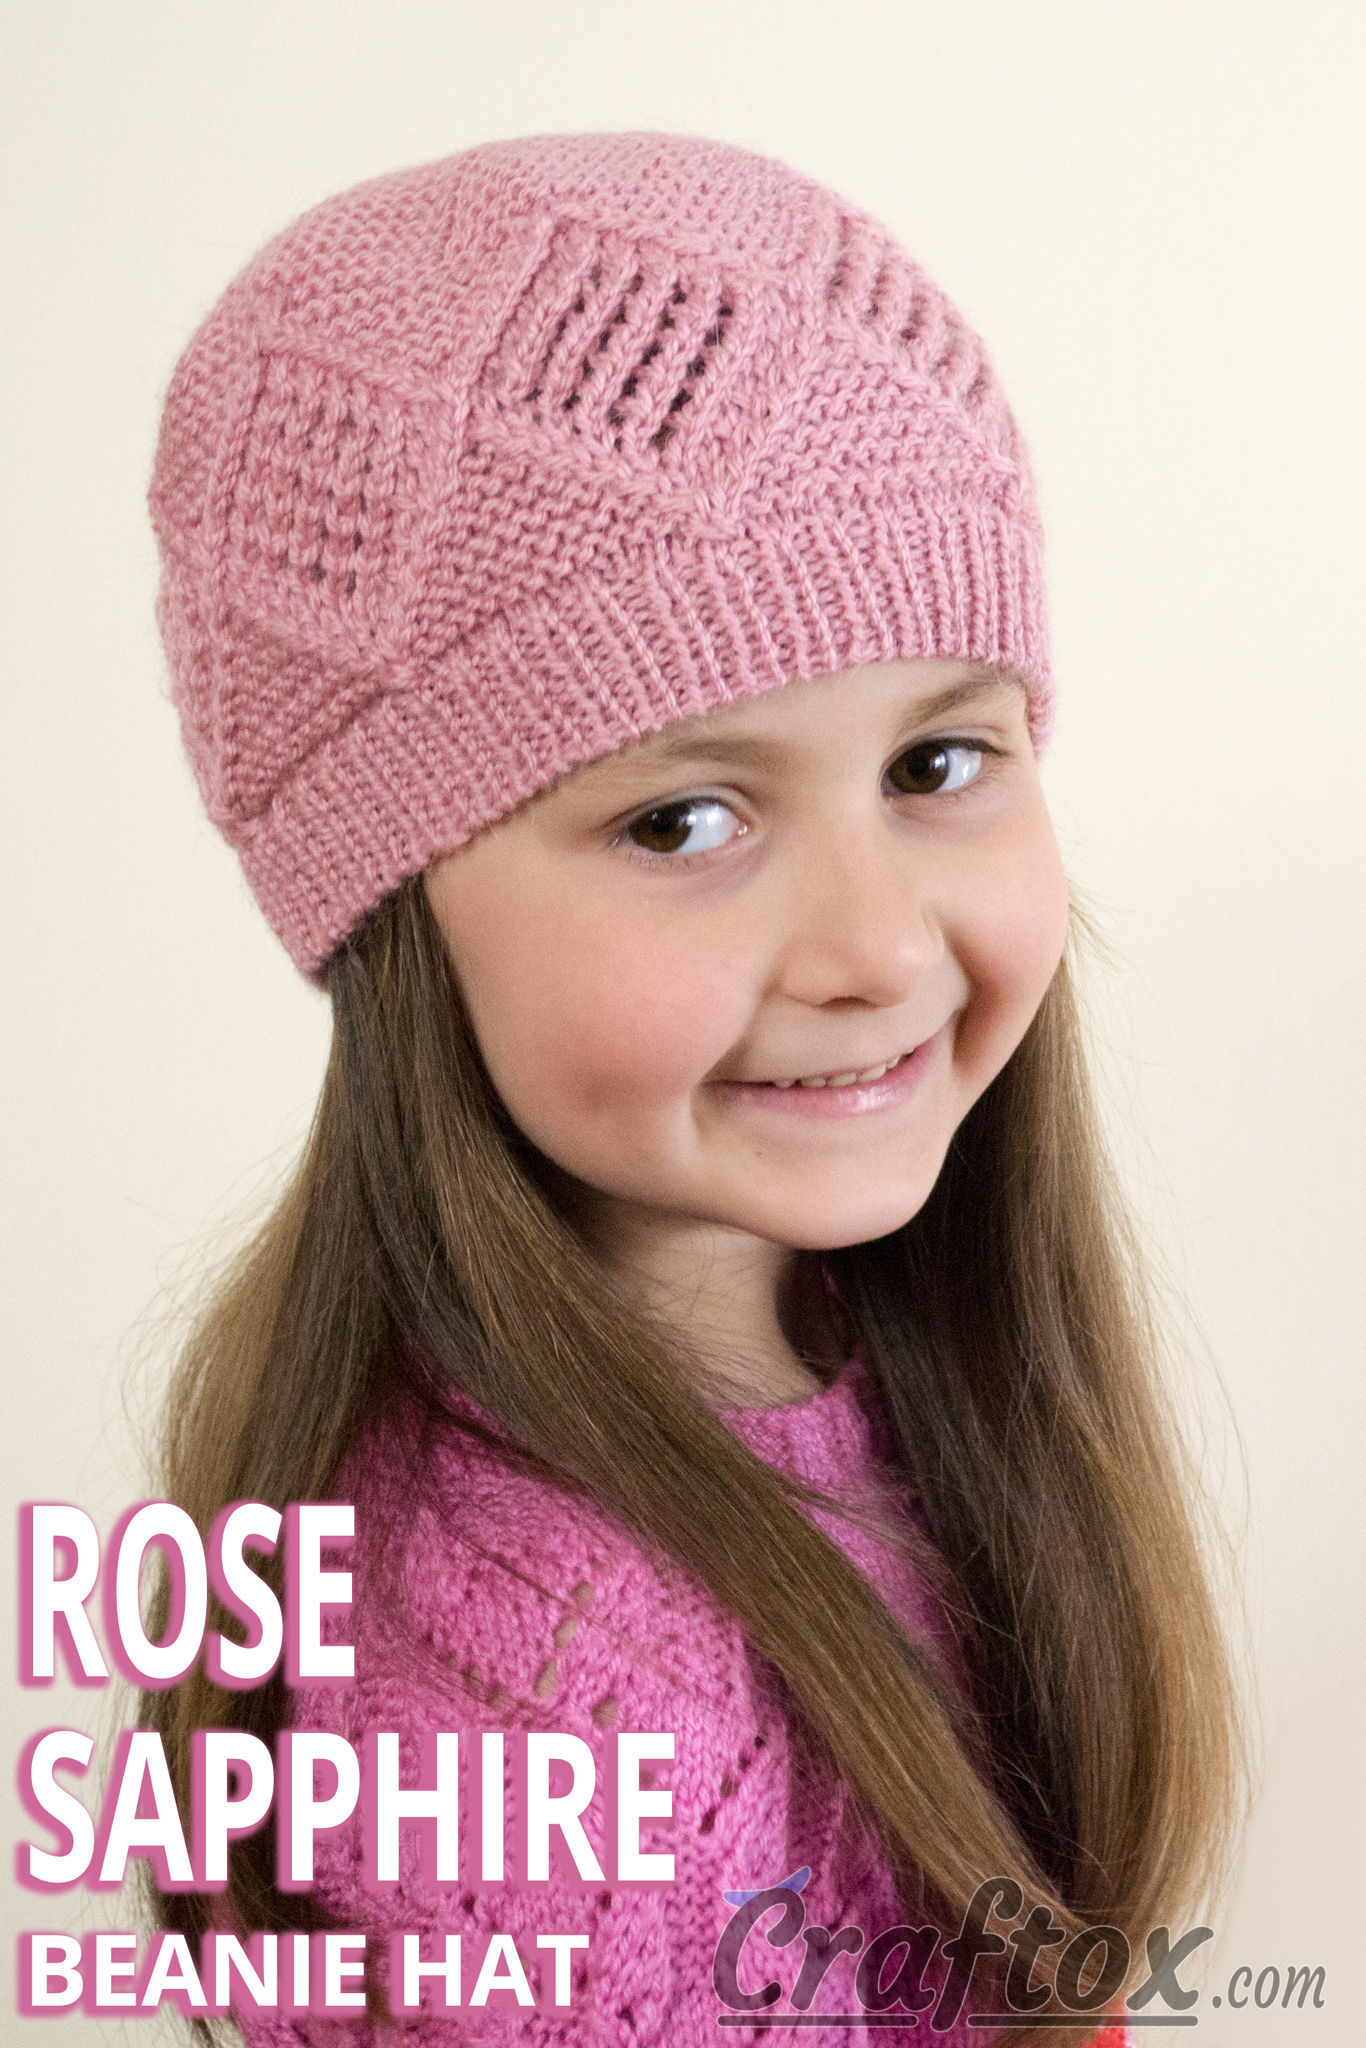 Diamond texture beanie hat "Rose Sapphire". Free knitting pattern.